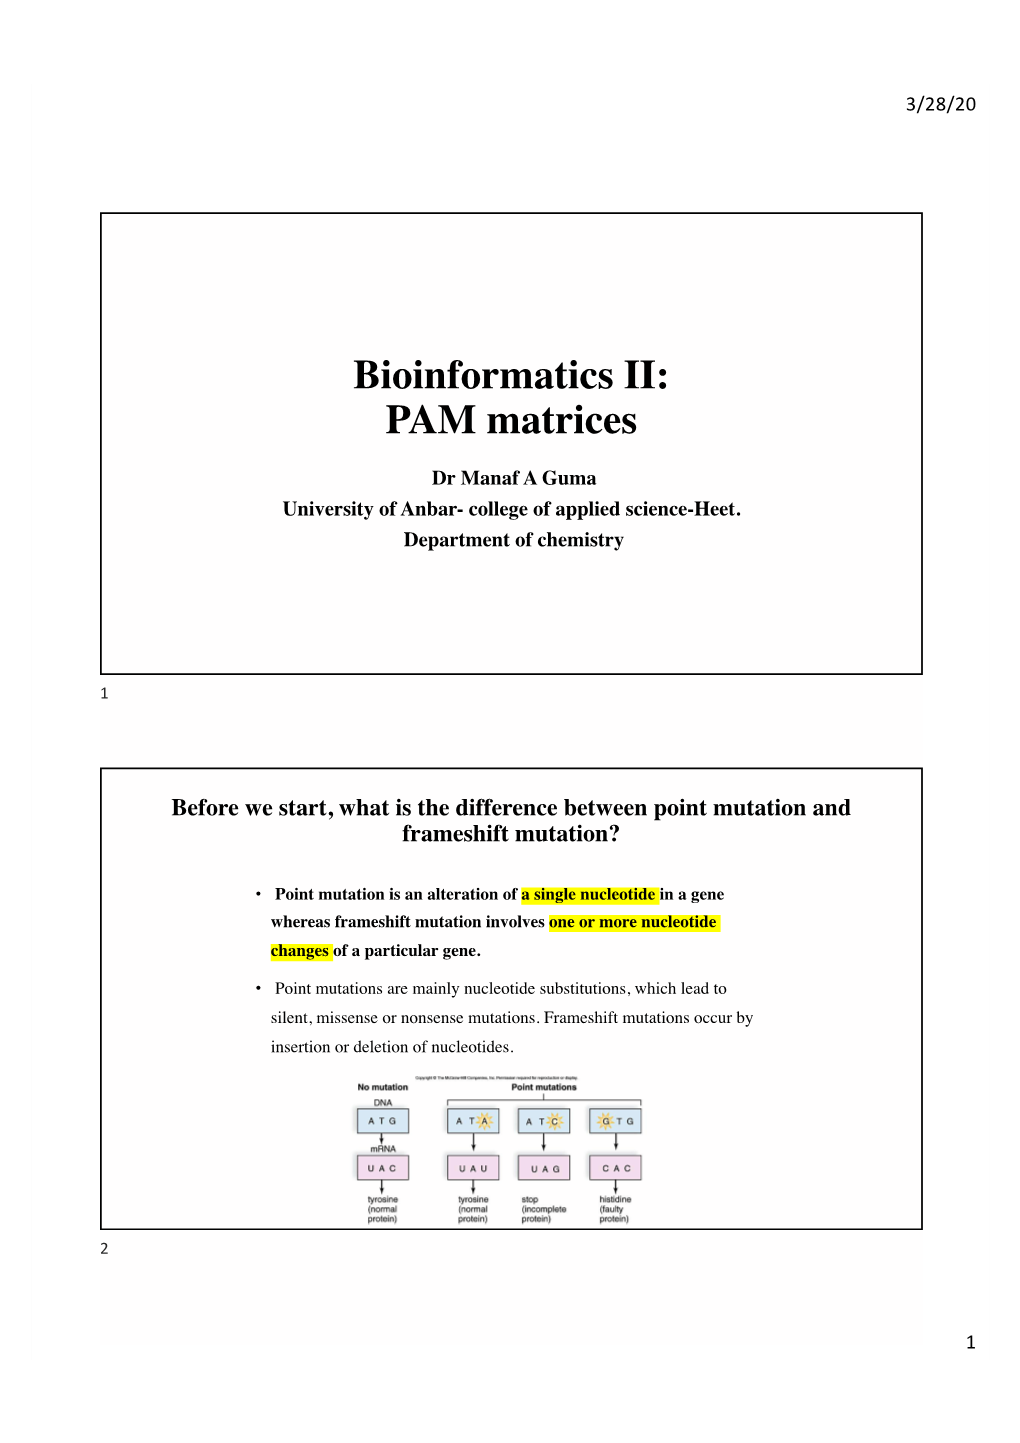 2-PAM Matrices